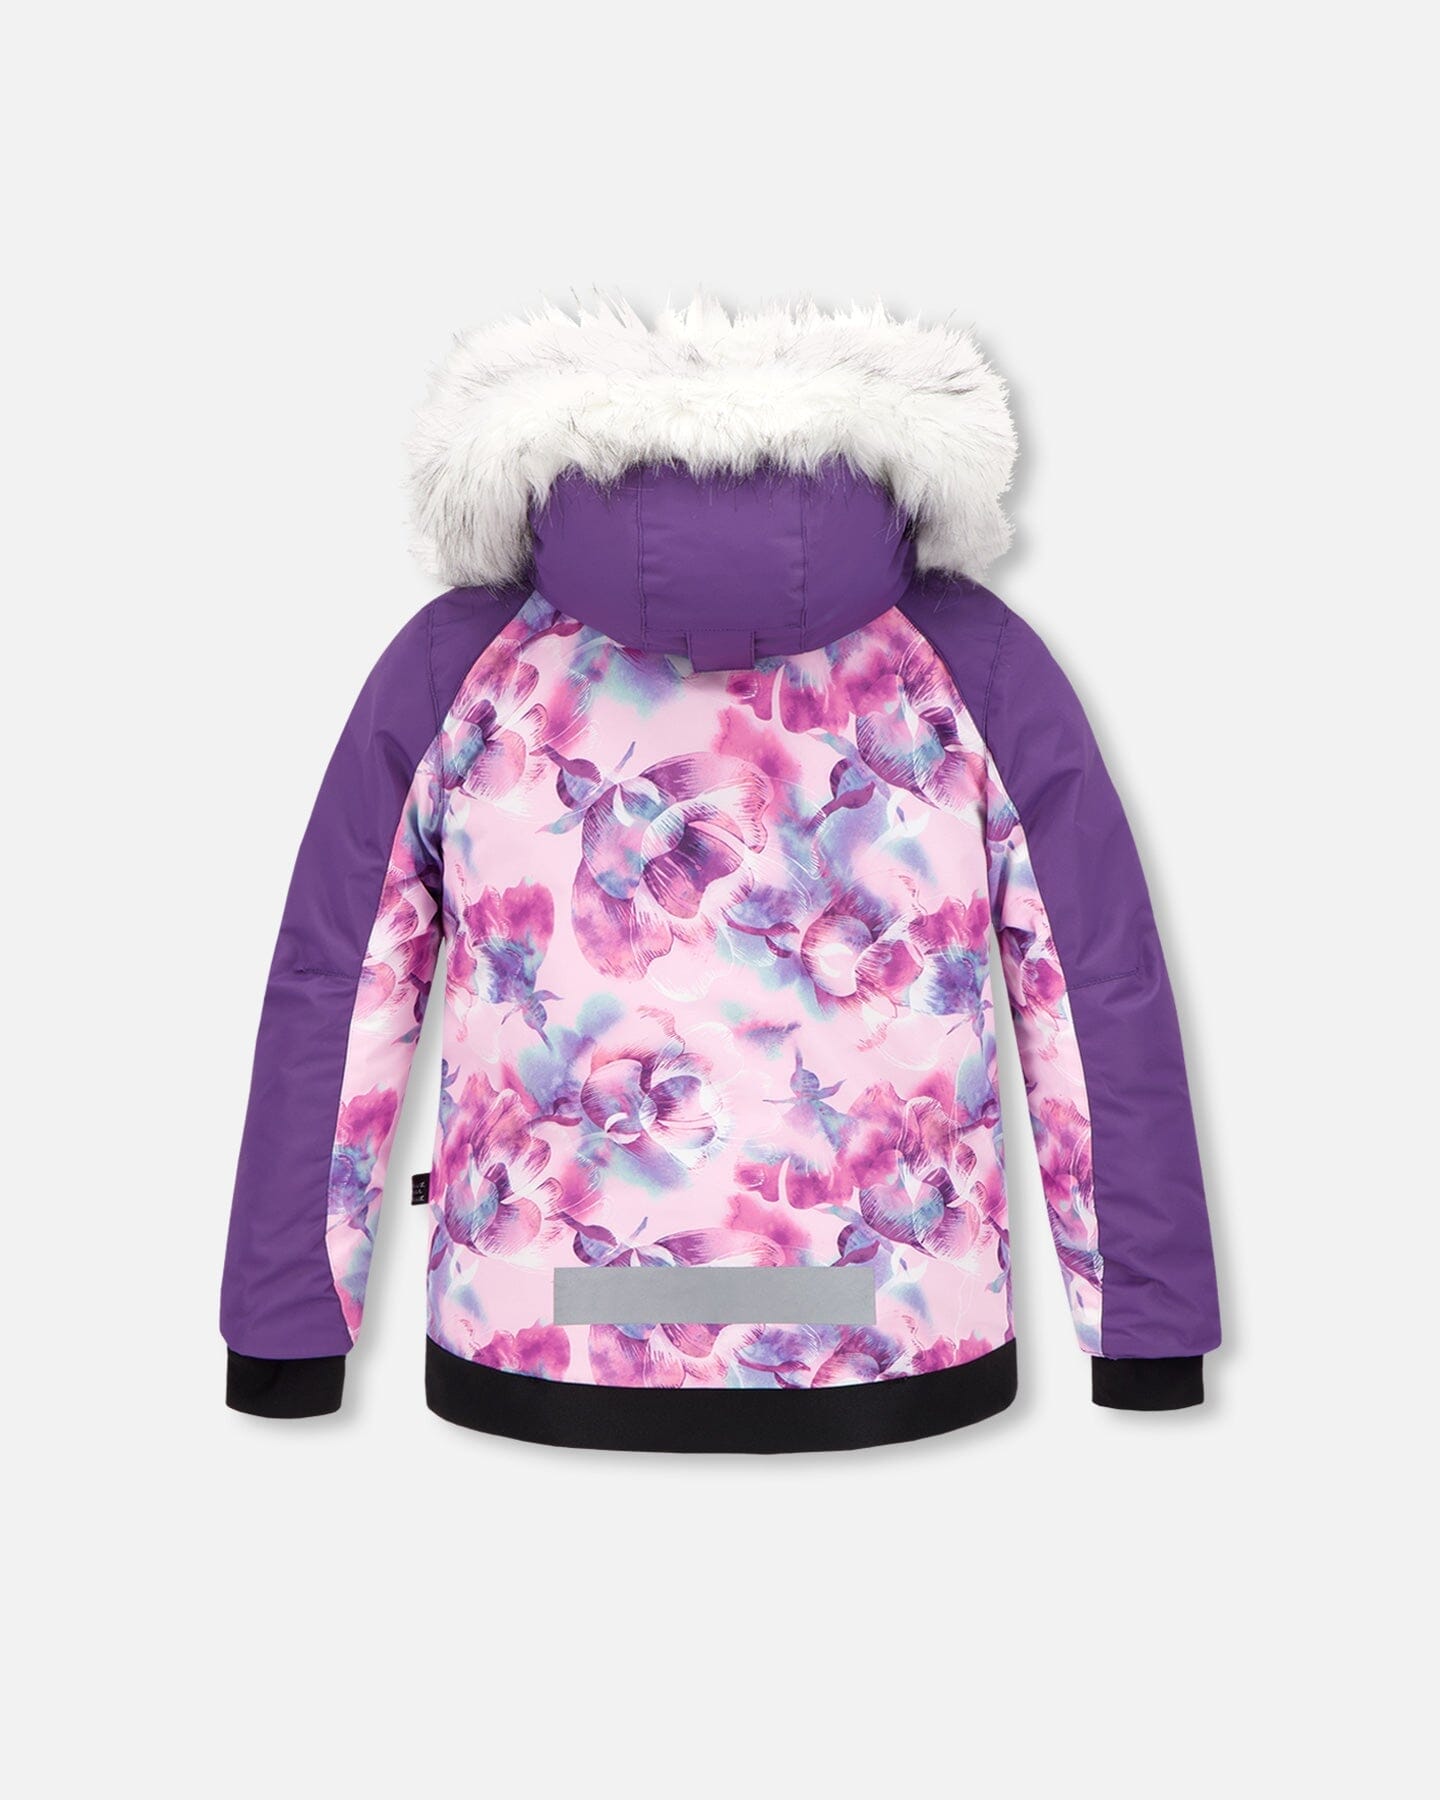 Two Piece Snowsuit Purple With Watercolor Floral Print - F10E802_574